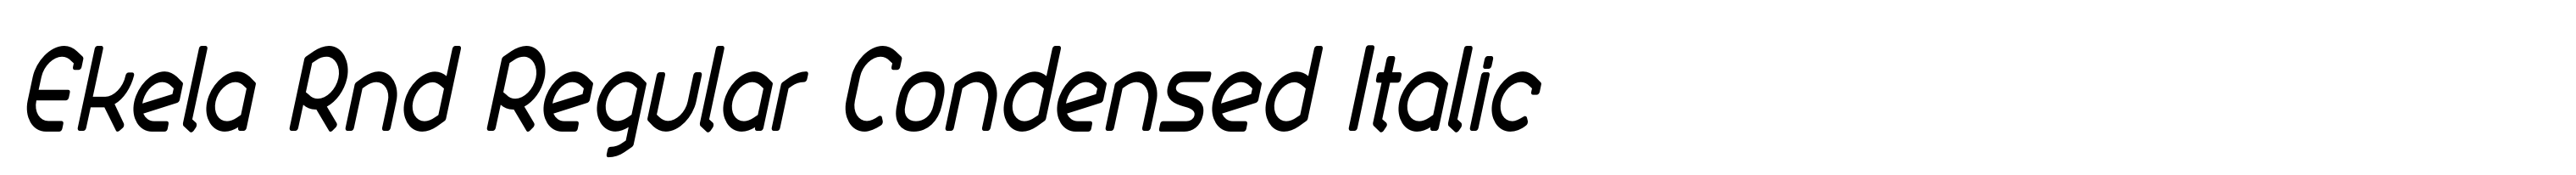 Ekela Rnd Regular Condensed Italic